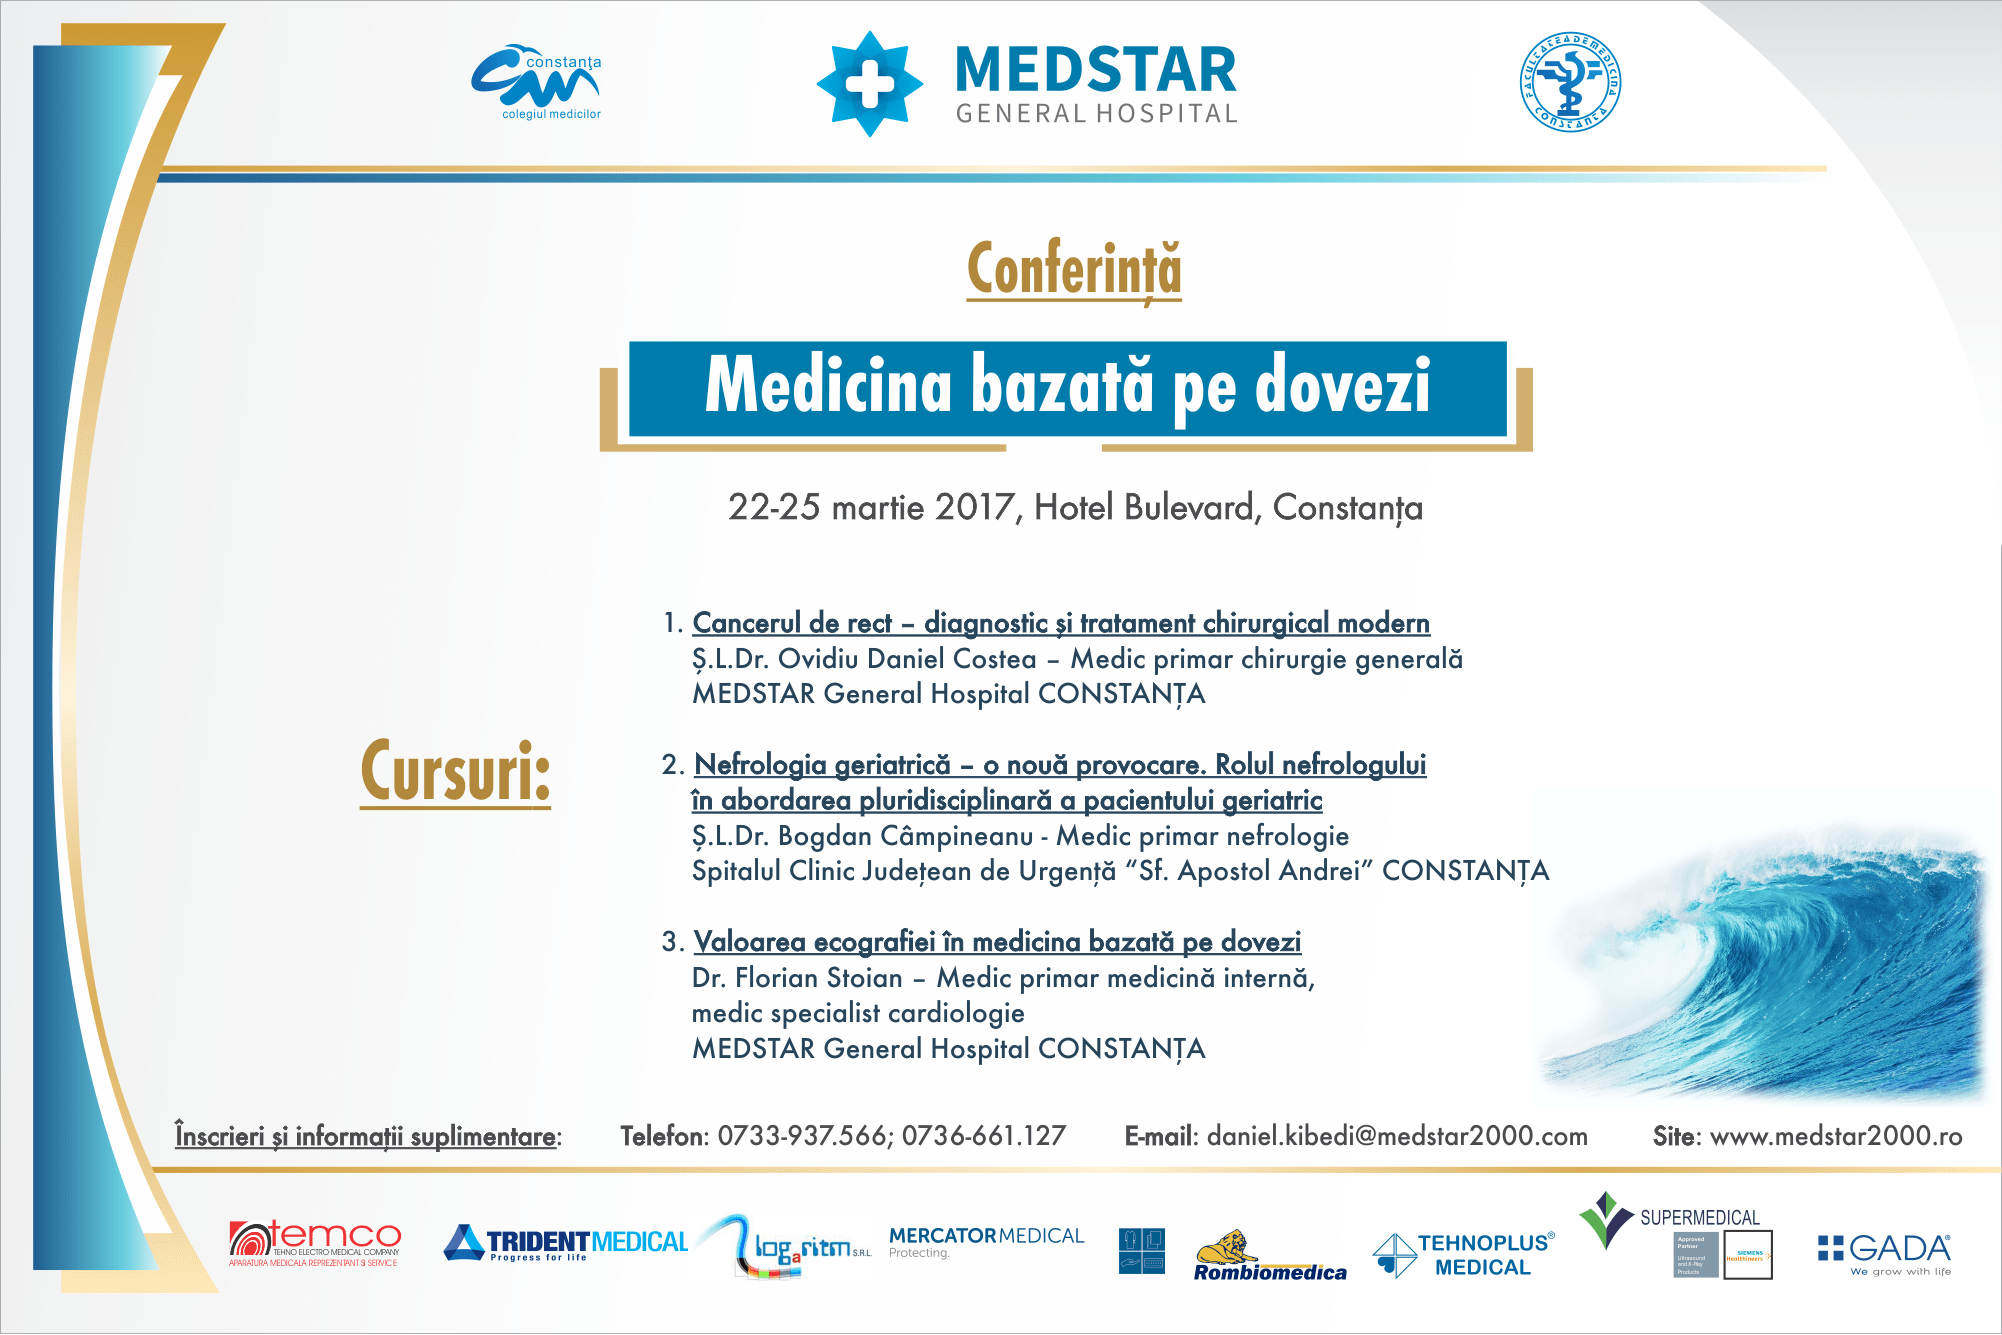 https://www.medstar2000.ro/wp-content/uploads/2015/11/Medicina-bazata-pe-dovezi.png